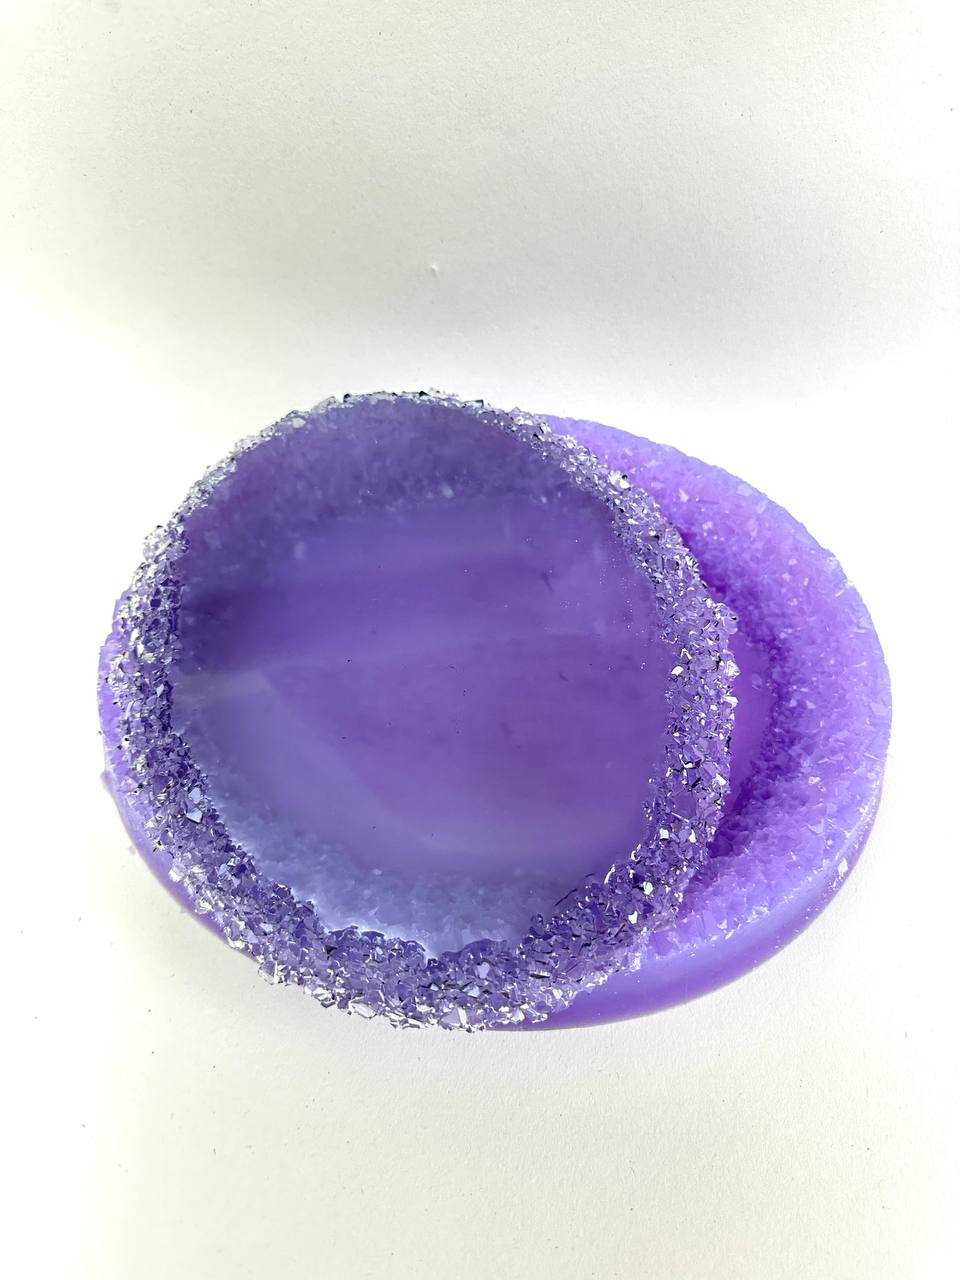 Ovale Harz-Tablettform mit Kristallrand – funkelnde Eleganz-Silikon-Bastelform